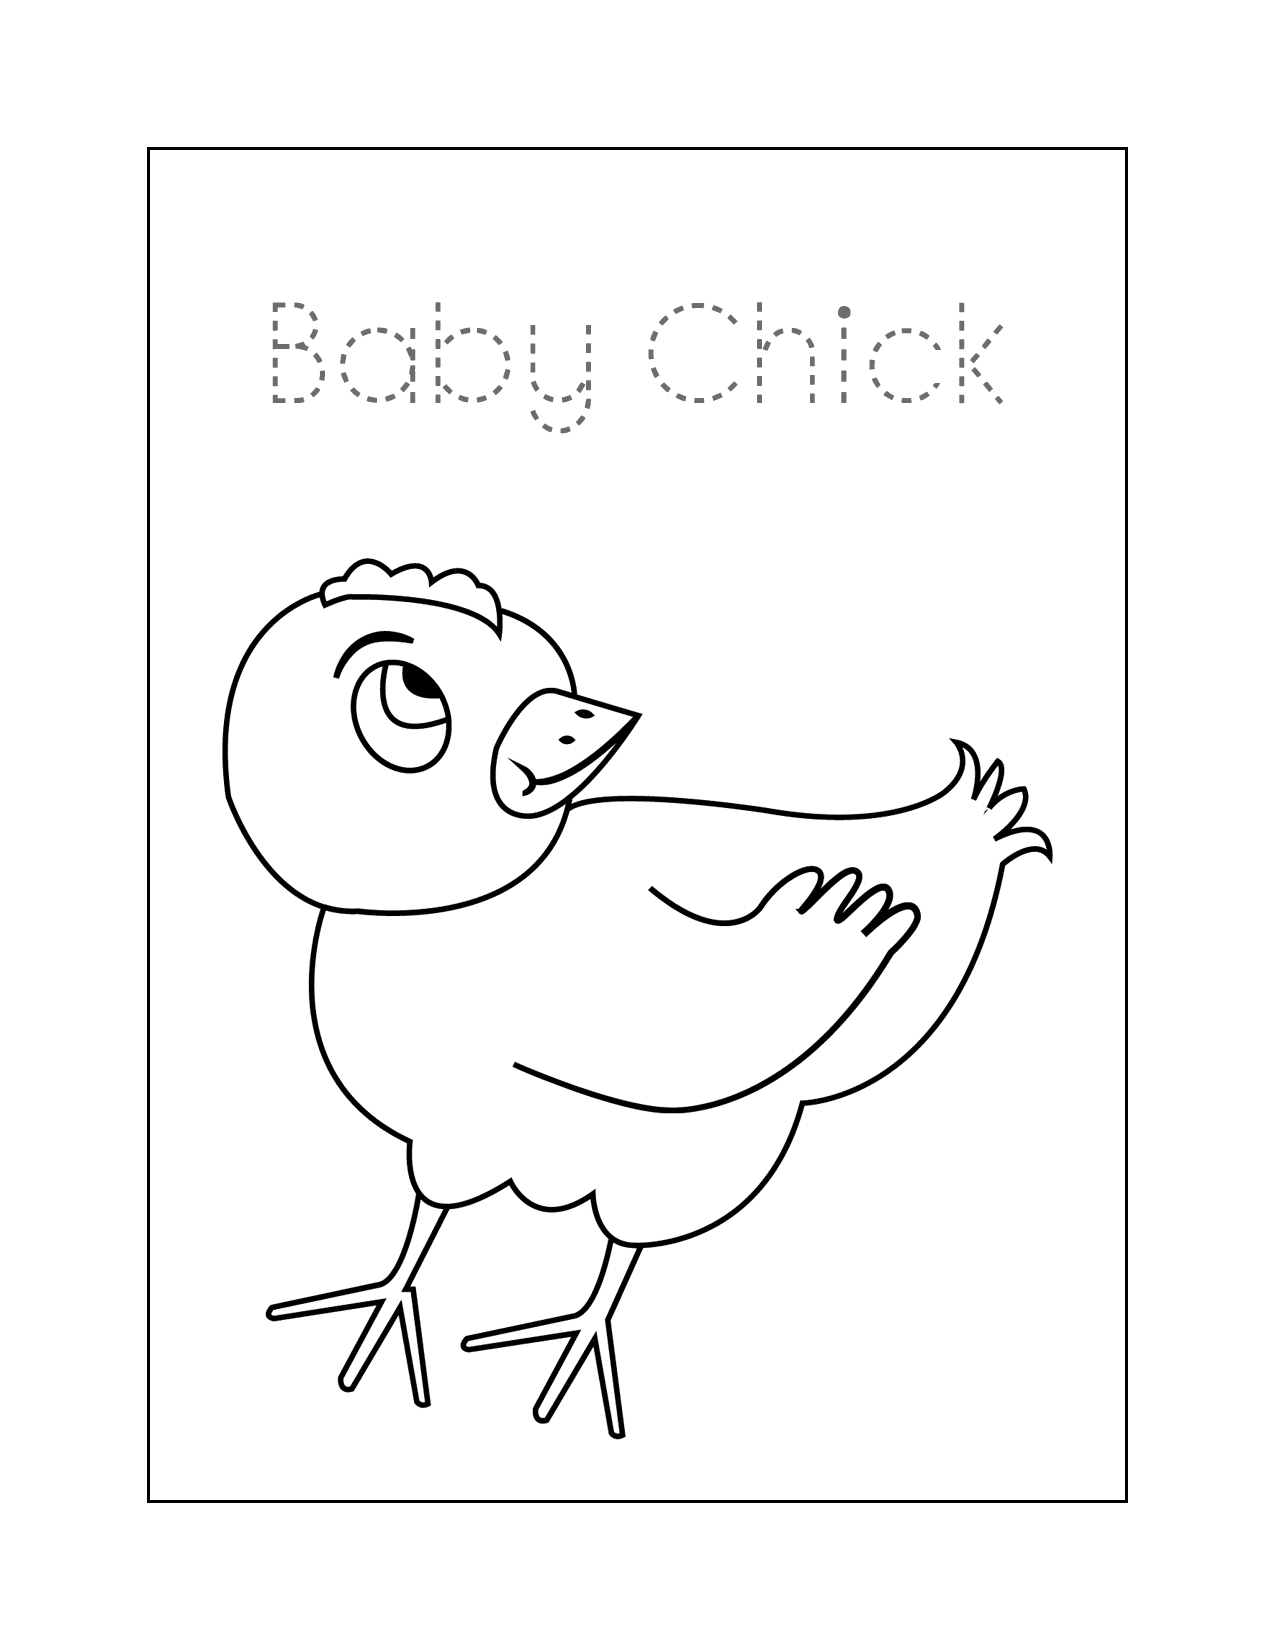 Baby Chick Worksheet